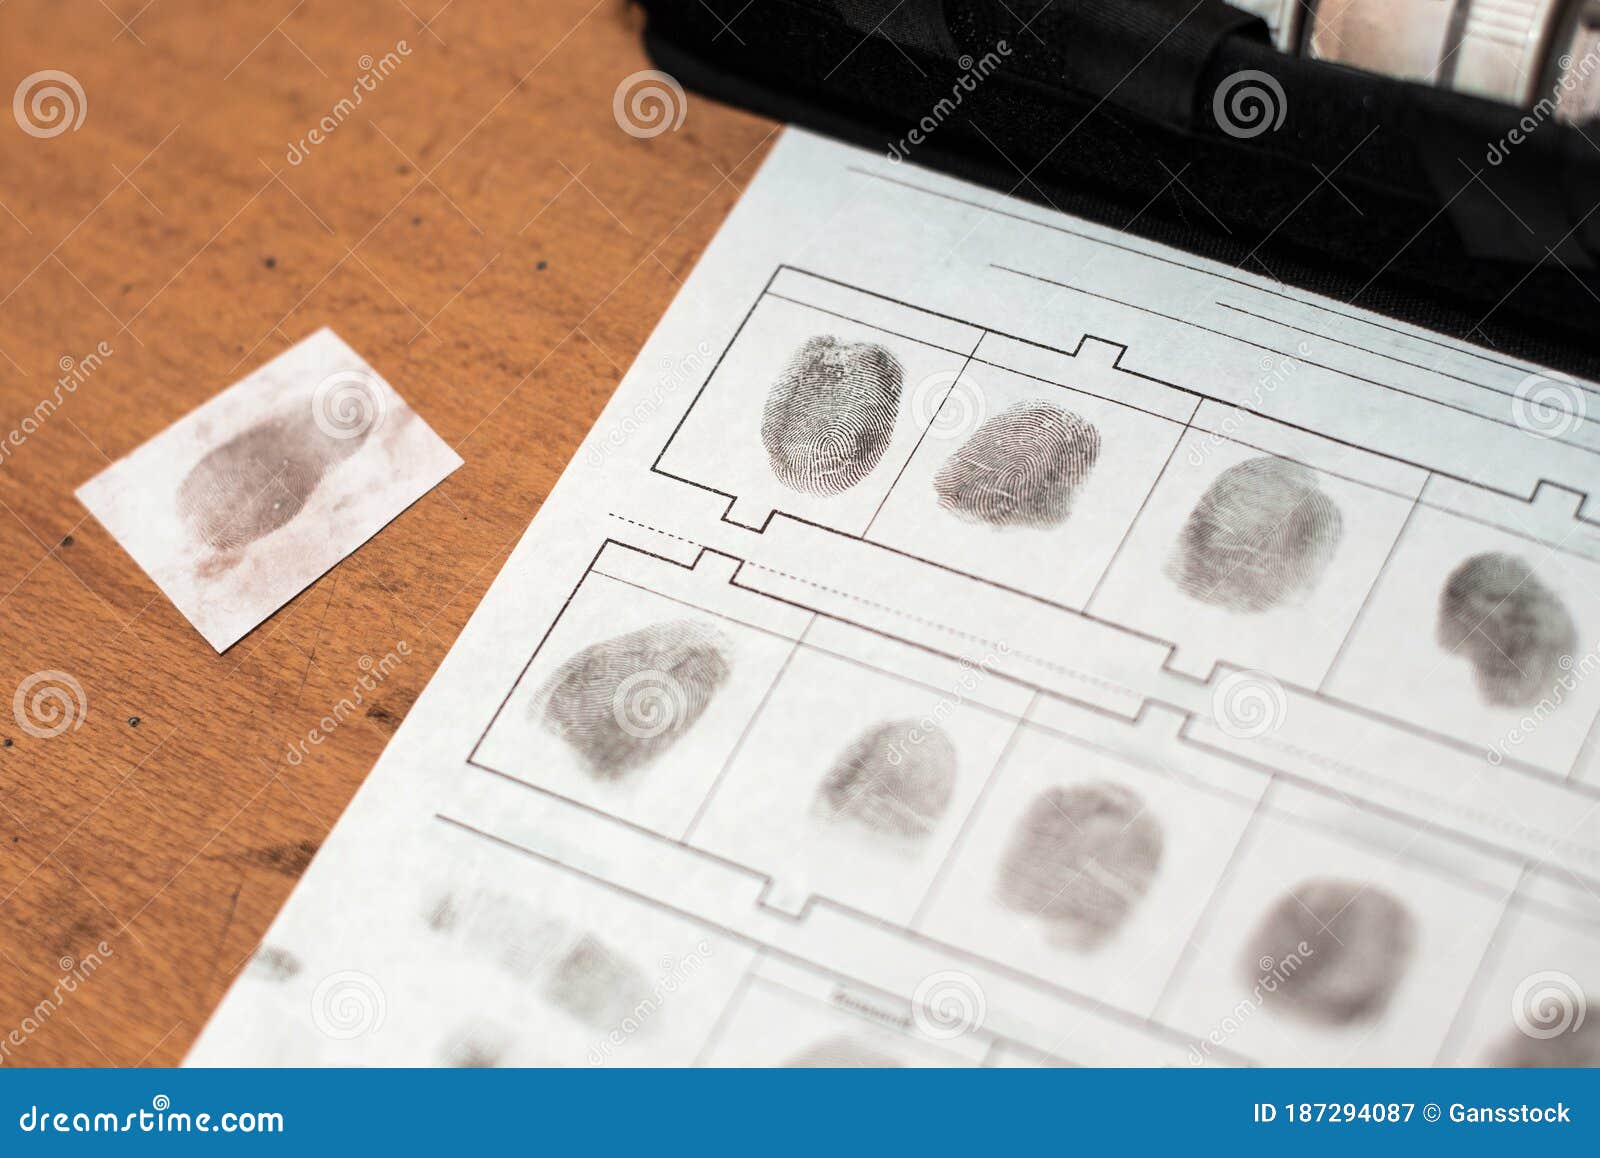 Sectionname ru настройки отпечатков профилей en fingerprints. Отпечатки пальцев дактилоскопия. Отпечатки пальцев в криминалистике. Дактилоскопические порошки в криминалистике.